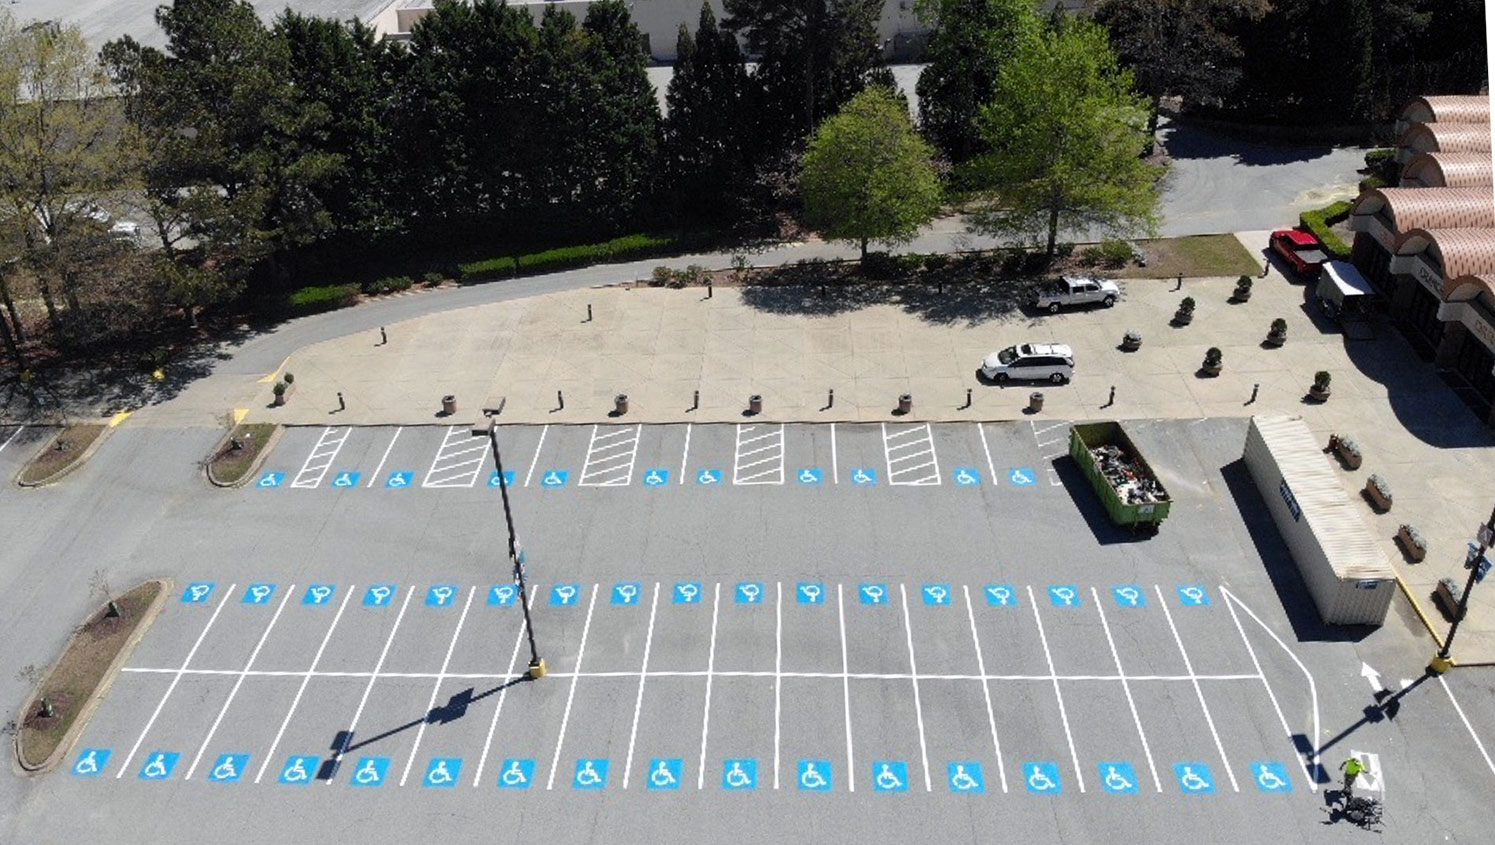 birds eye view of parking lot line striping at Worldchangers Intl Church in College Park, GA